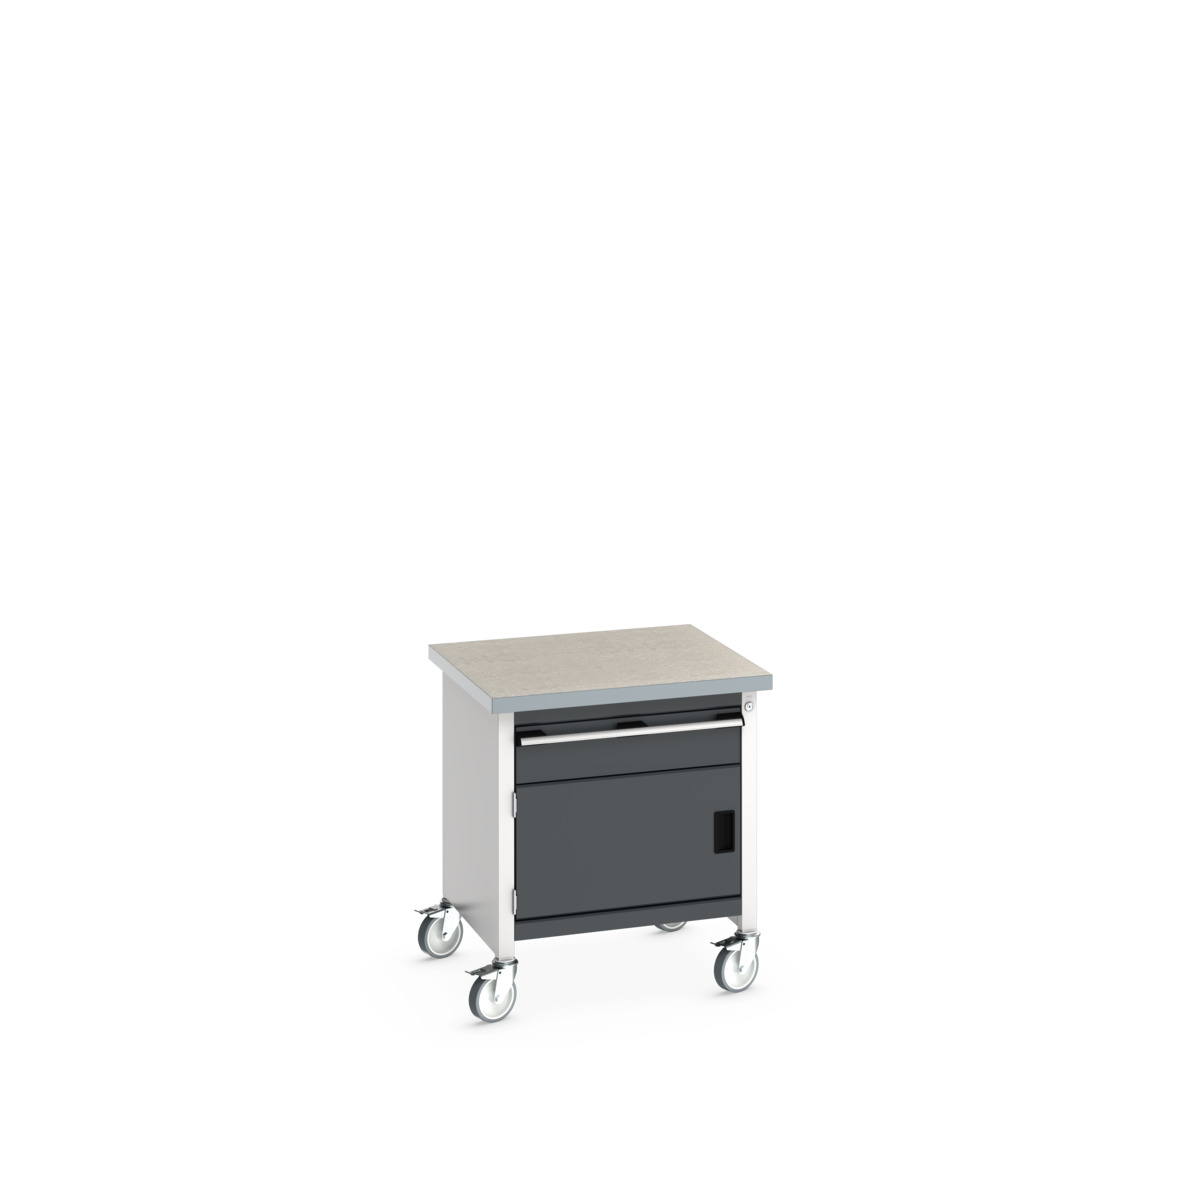 41002090. - cubio mobile storage bench (lino)